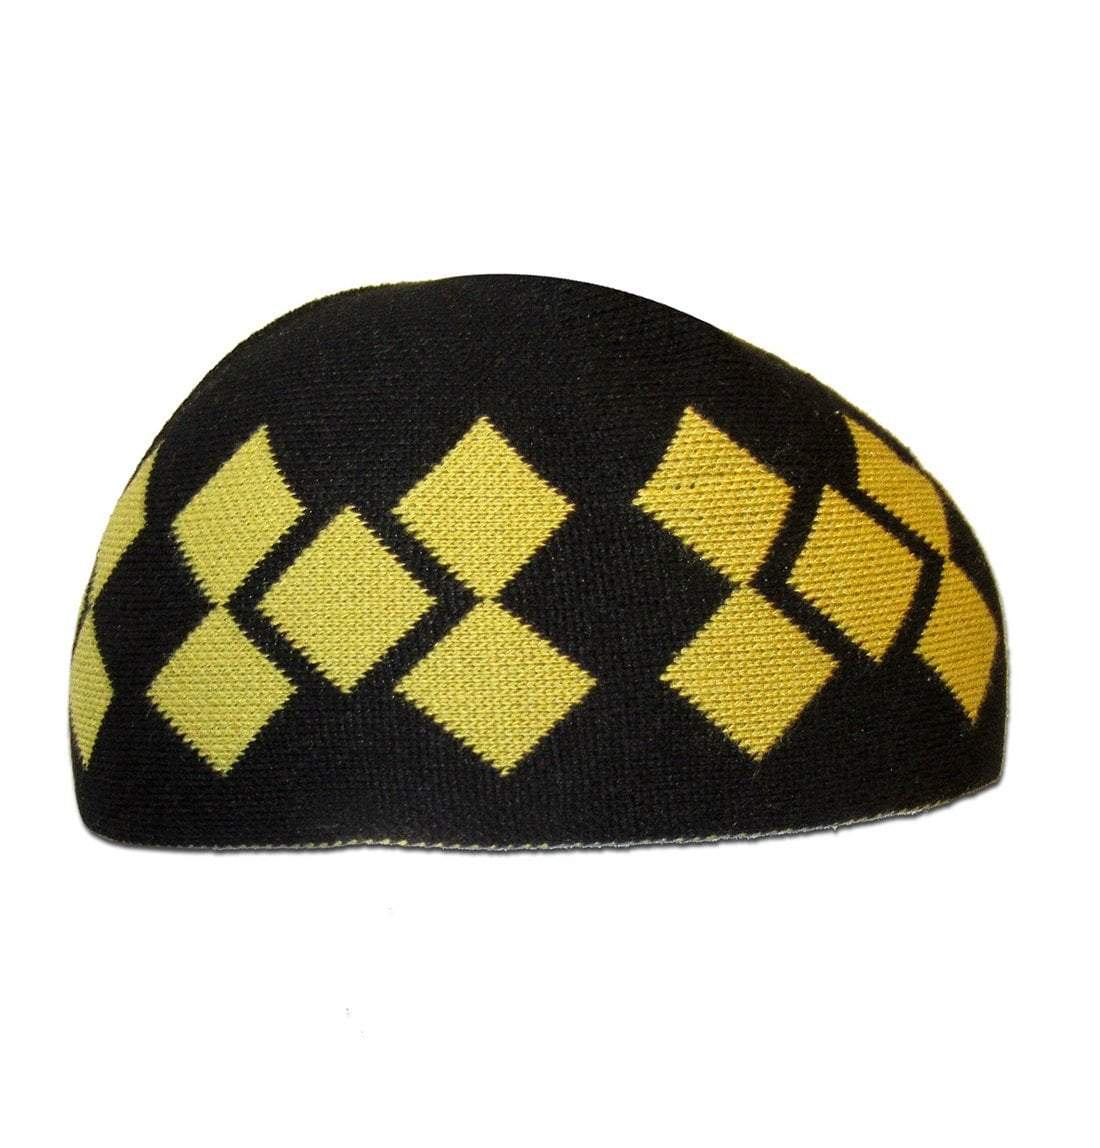 Modefa Islamic Men's Argyle Cotton Kufi Cap (Black/Yellow)